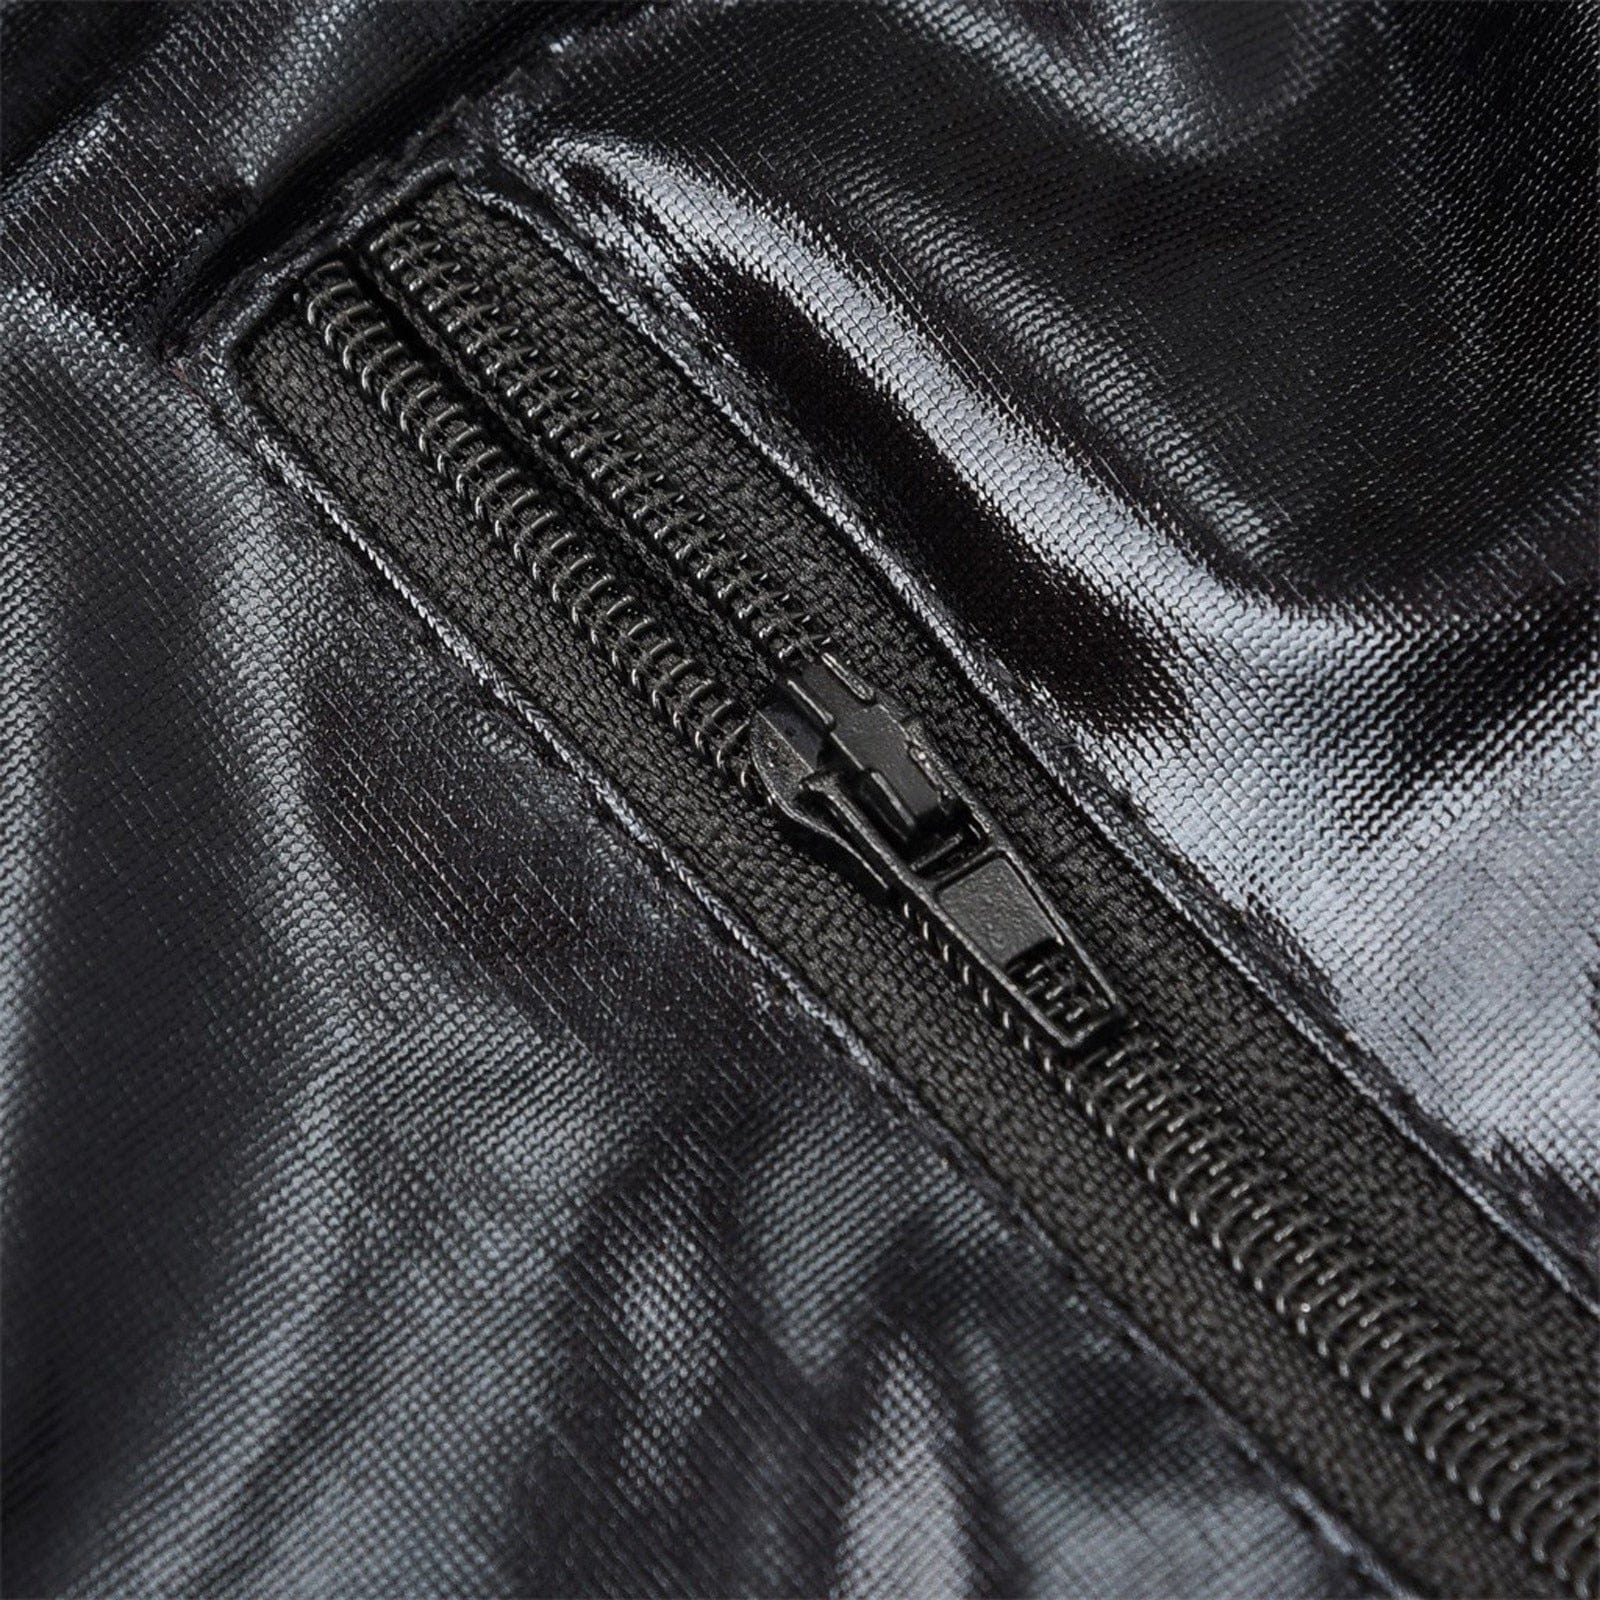 Kinky Cloth One-Piece Crotchless Leather Lingerie